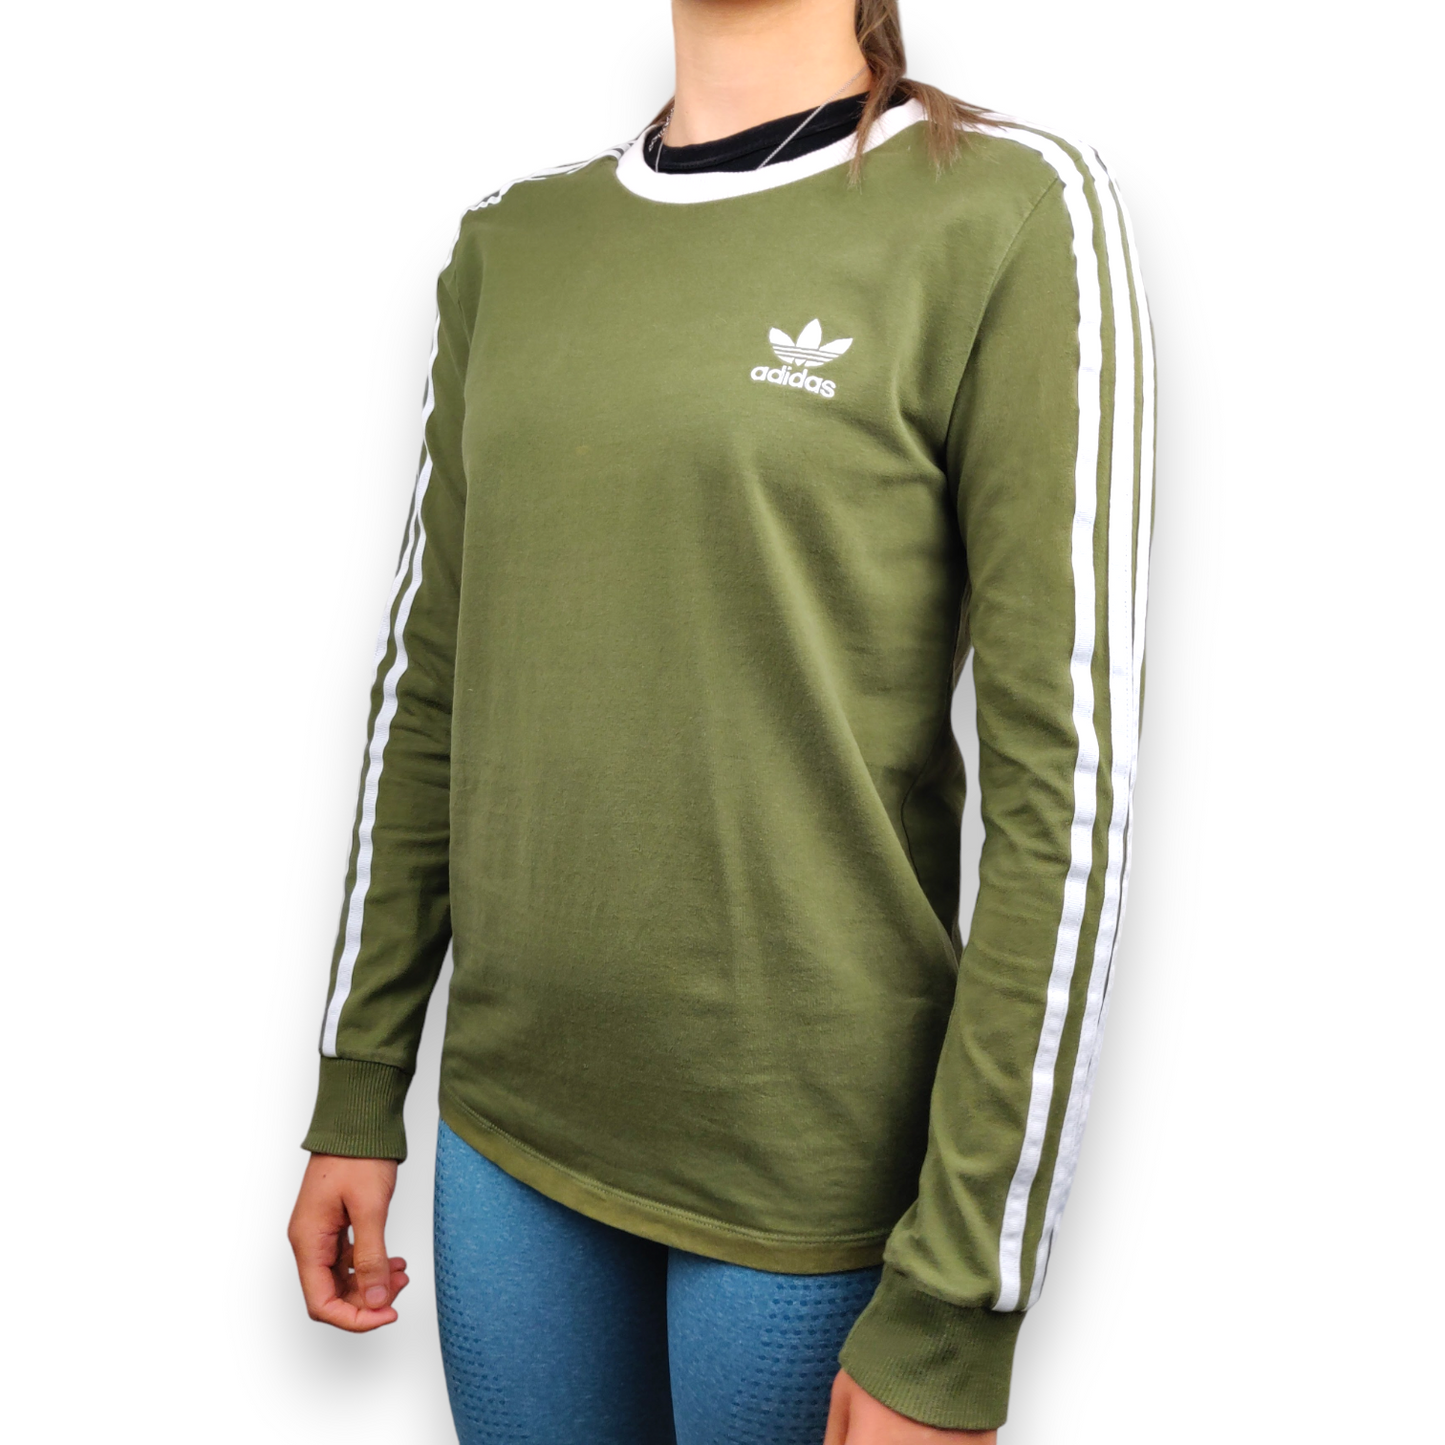 Adidas Green 3 Stripes Crew Neck Long Sleeve T-shirt Women Size UK 10